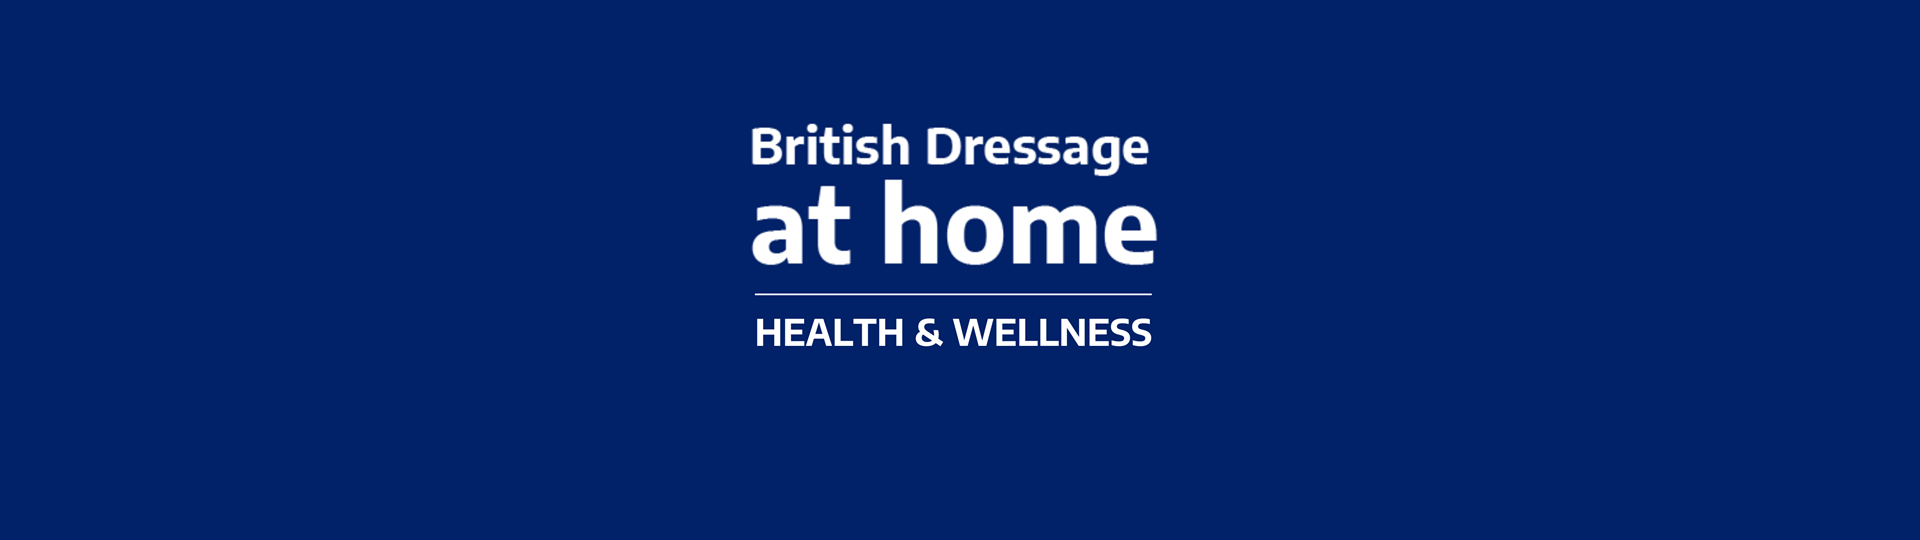 BD At Home Health & Wellness